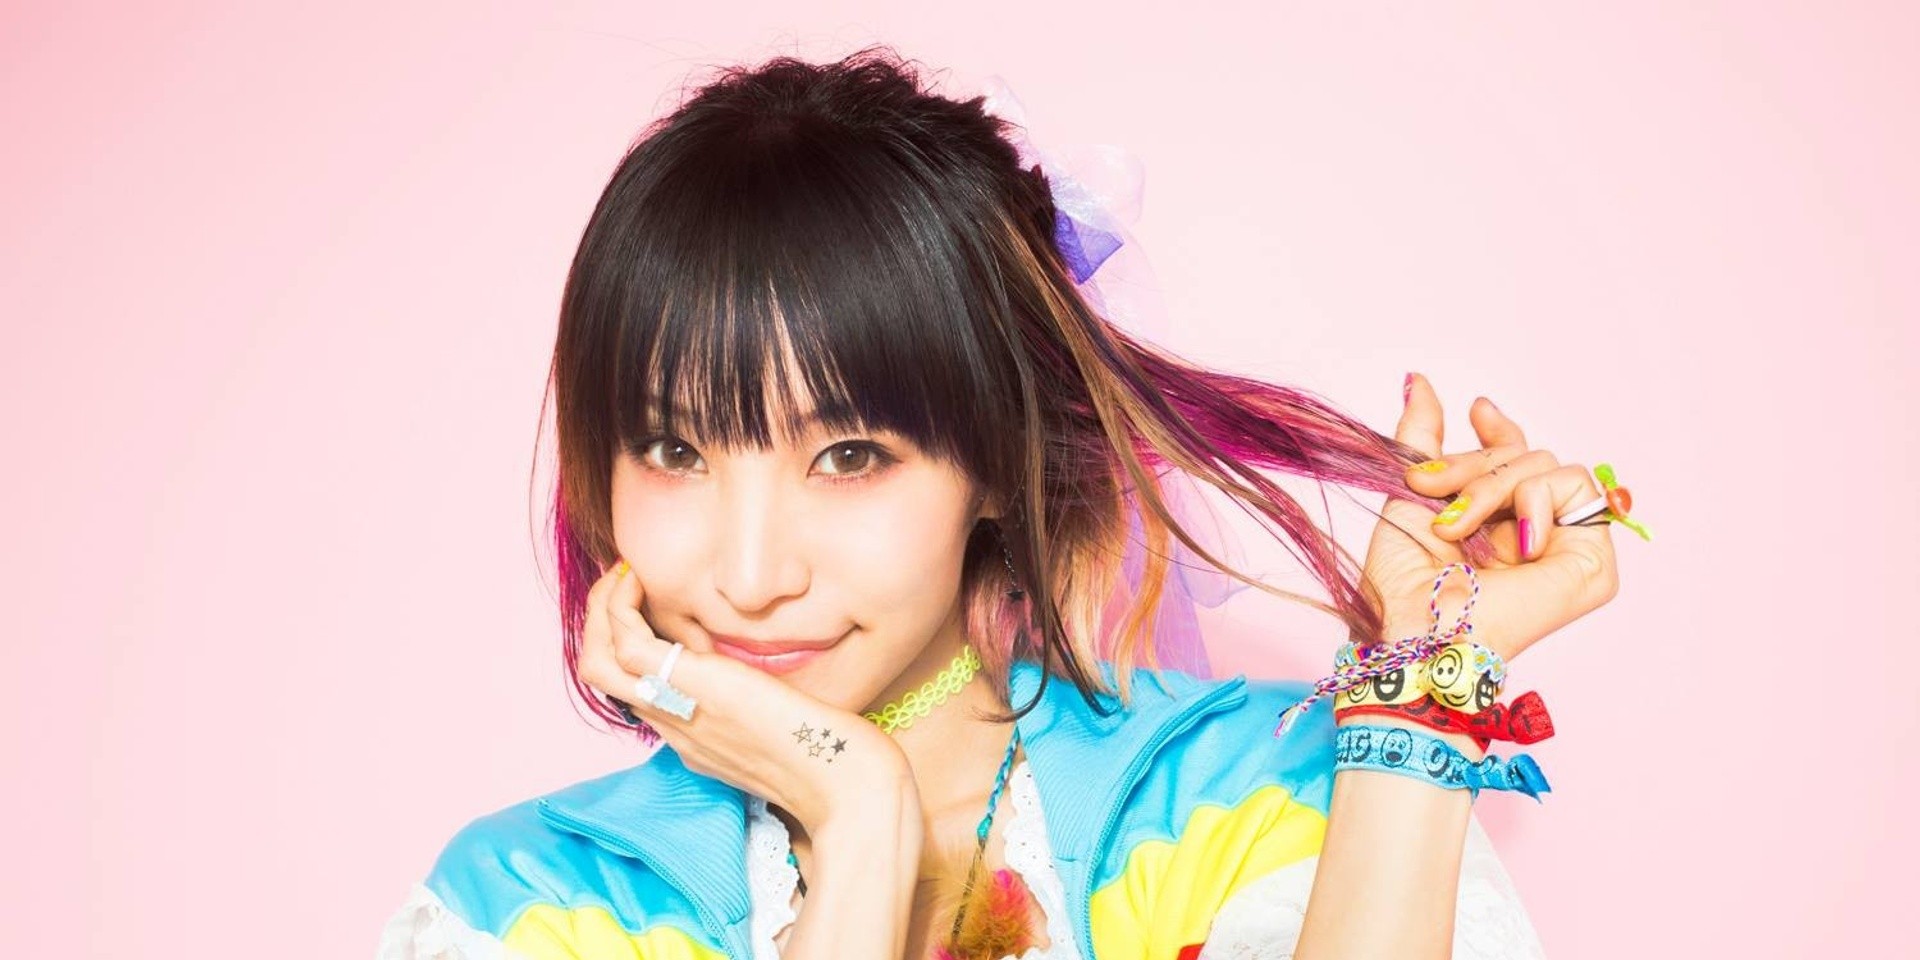 Japanese singer LiSA to return to Singapore this July